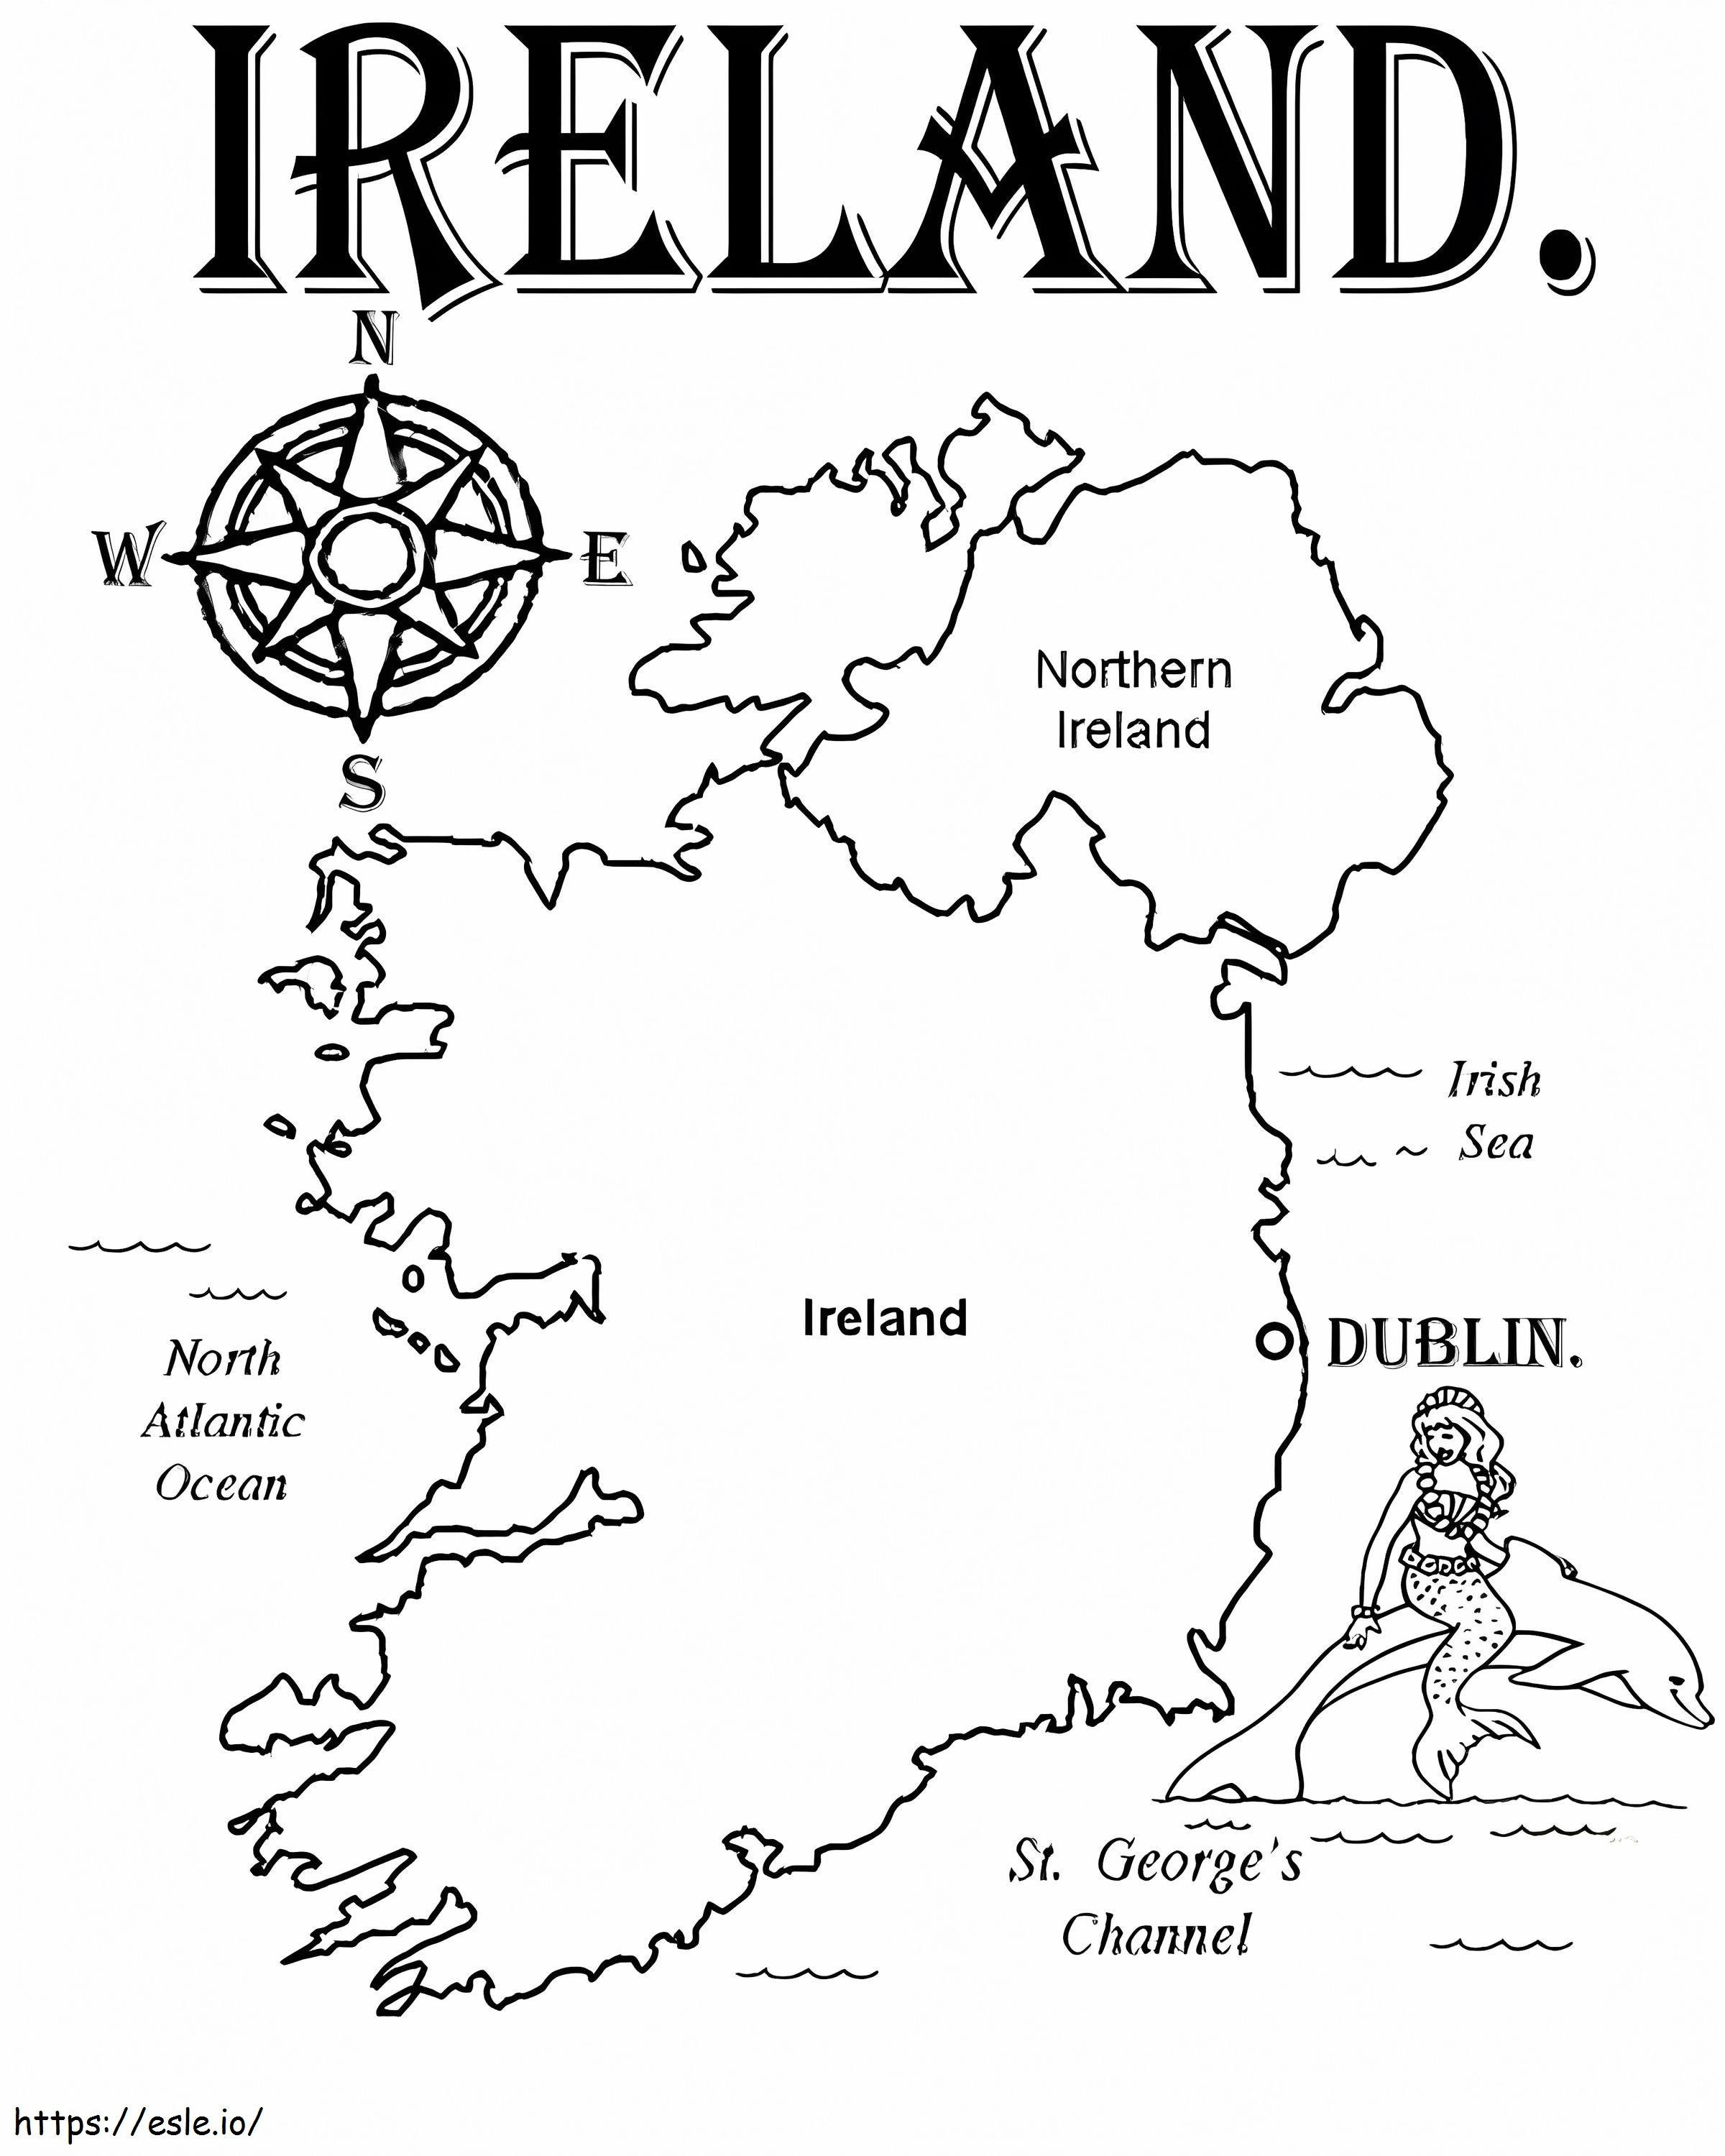 Harta Irlandei de colorat